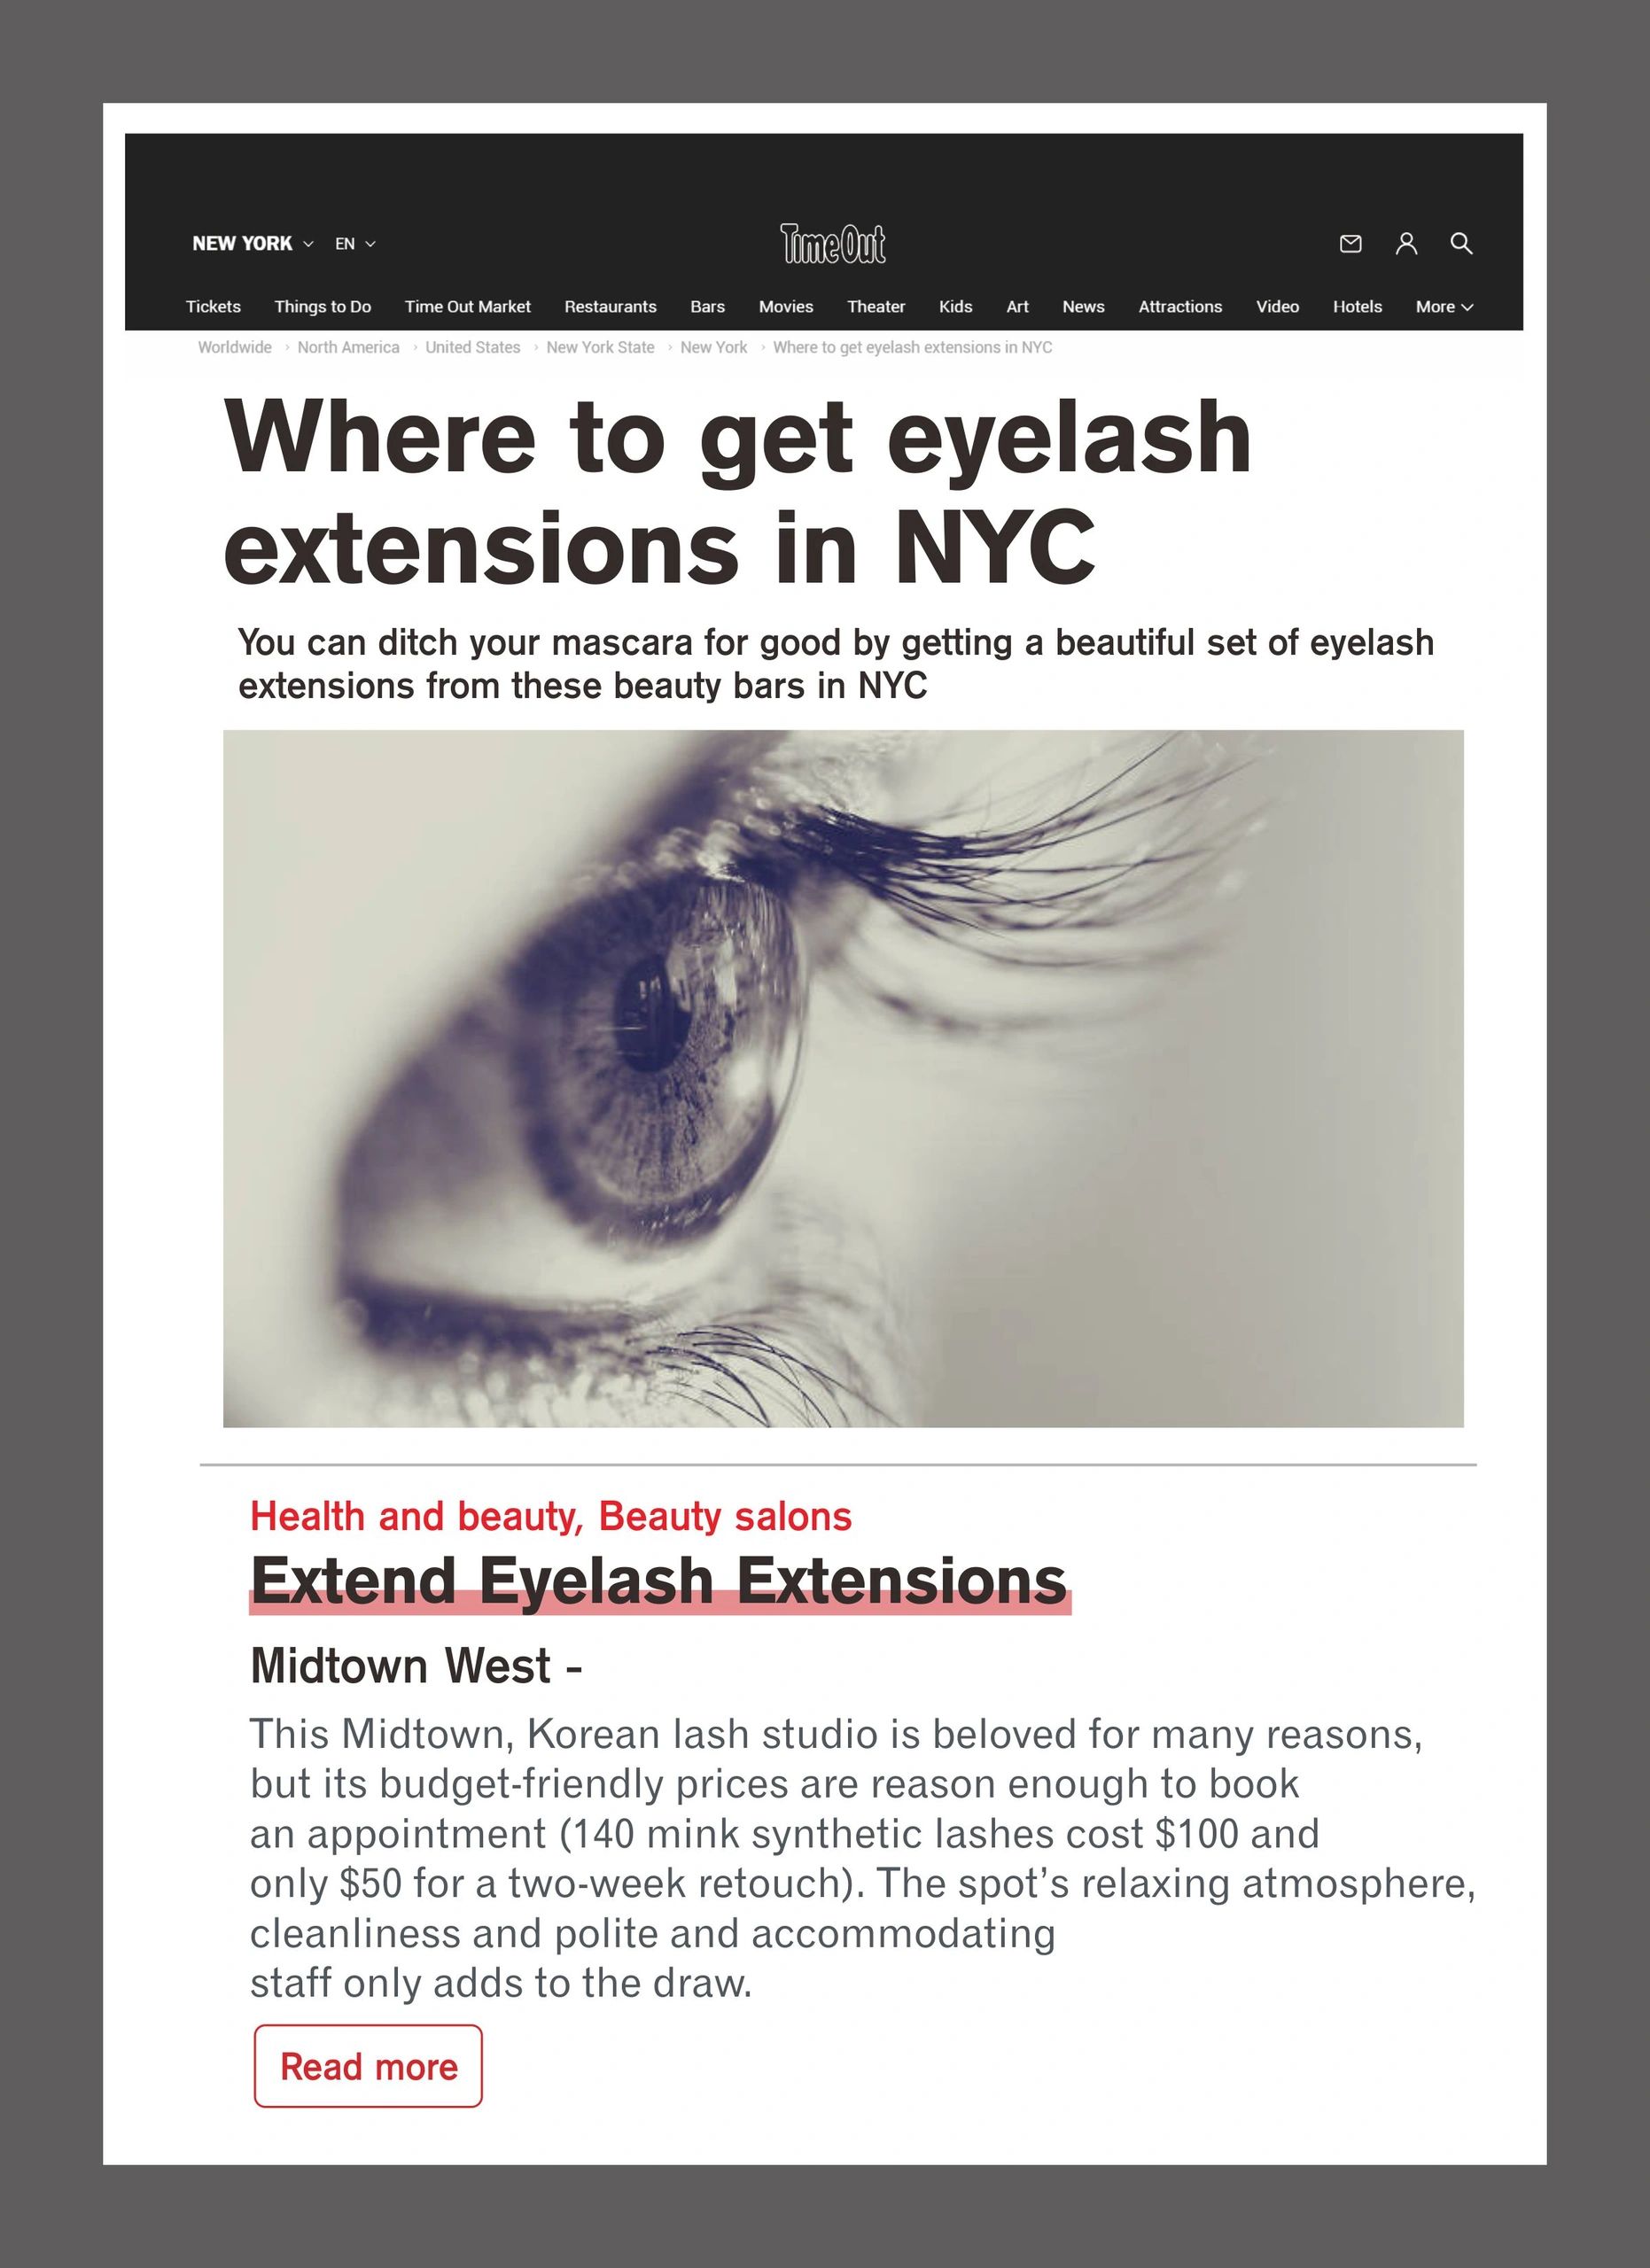 extend eyelash extension reviewed best eyelash salon in NYC